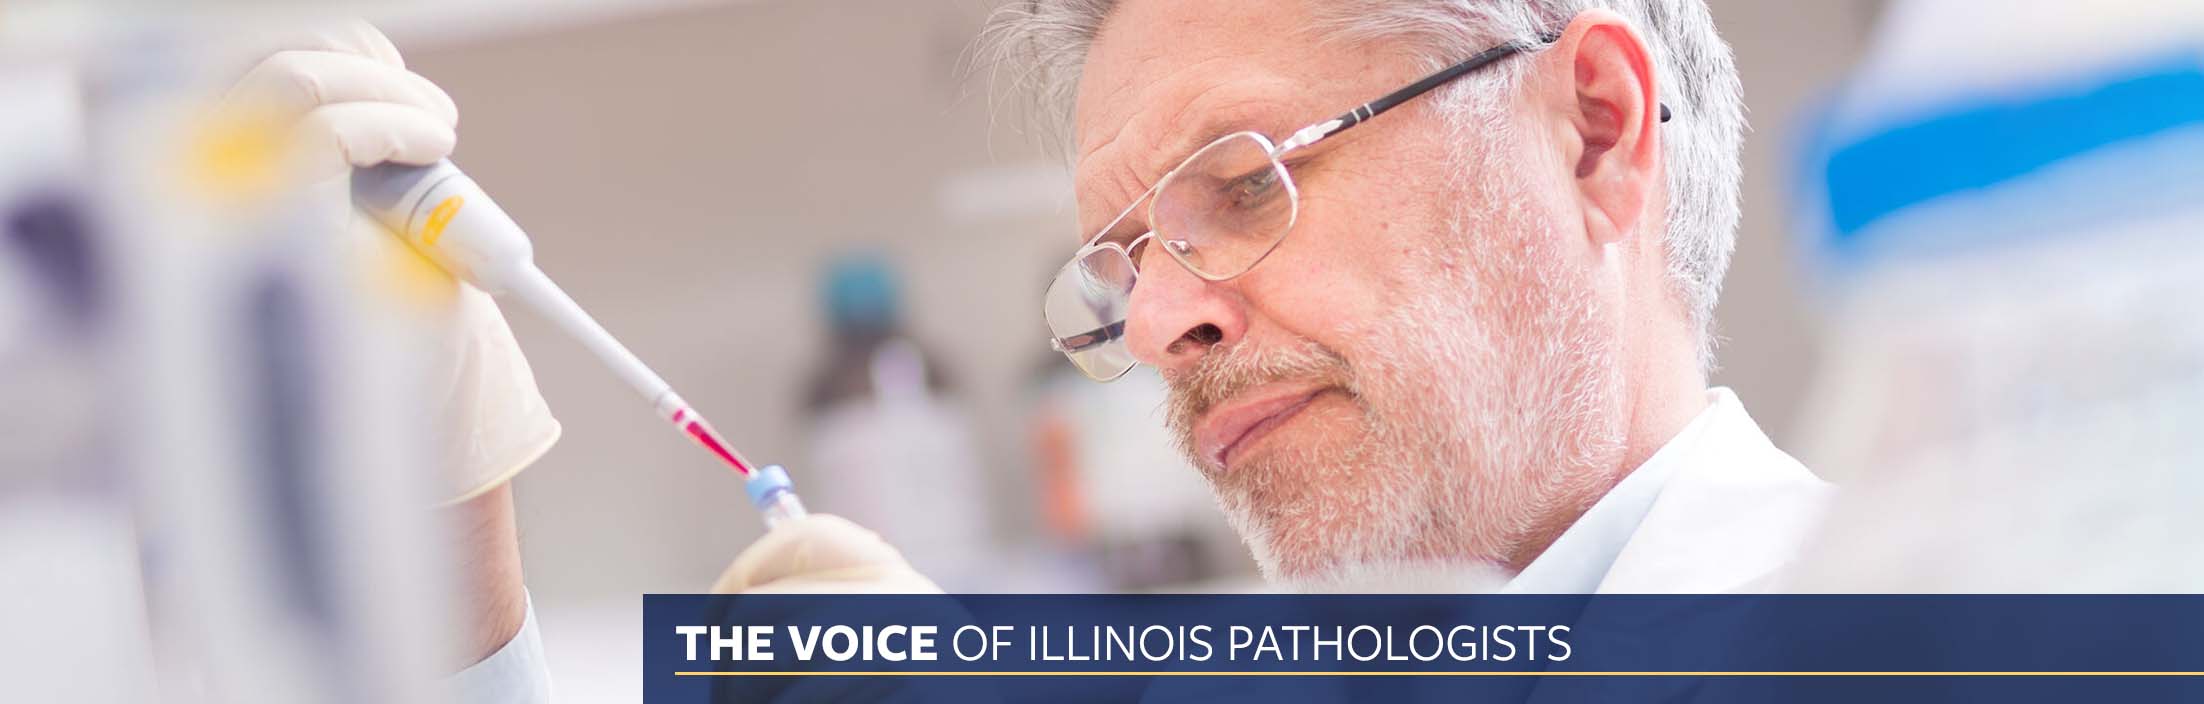 The voice of Illinois pathologists